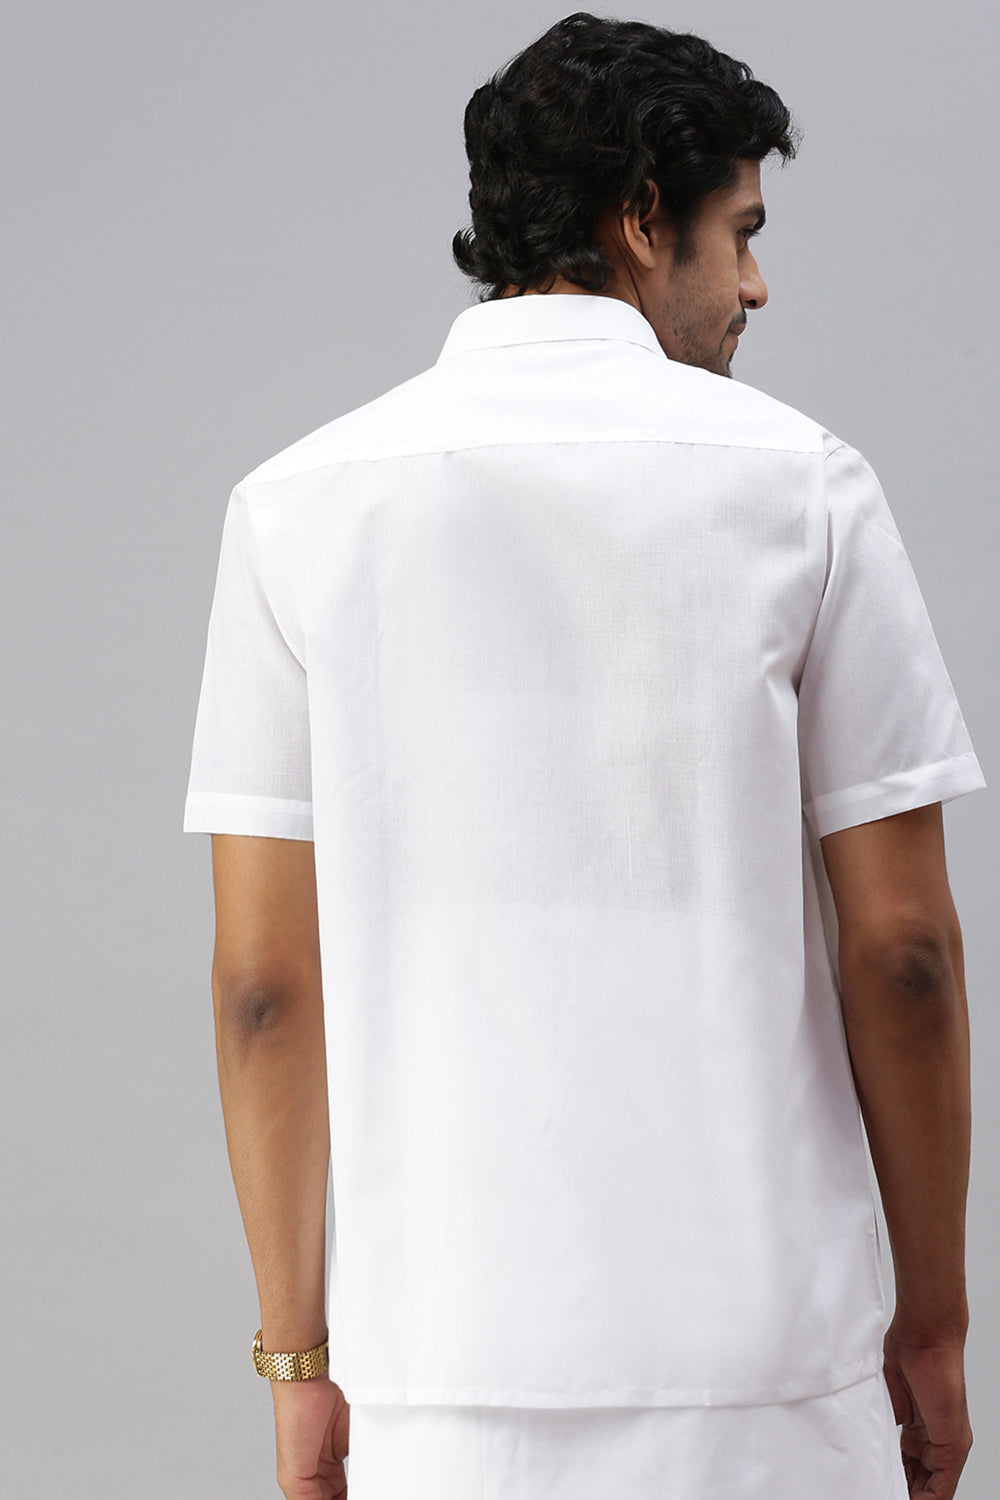 Mens Cotton White Shirt Half Sleeves 100% Cotton -Back view